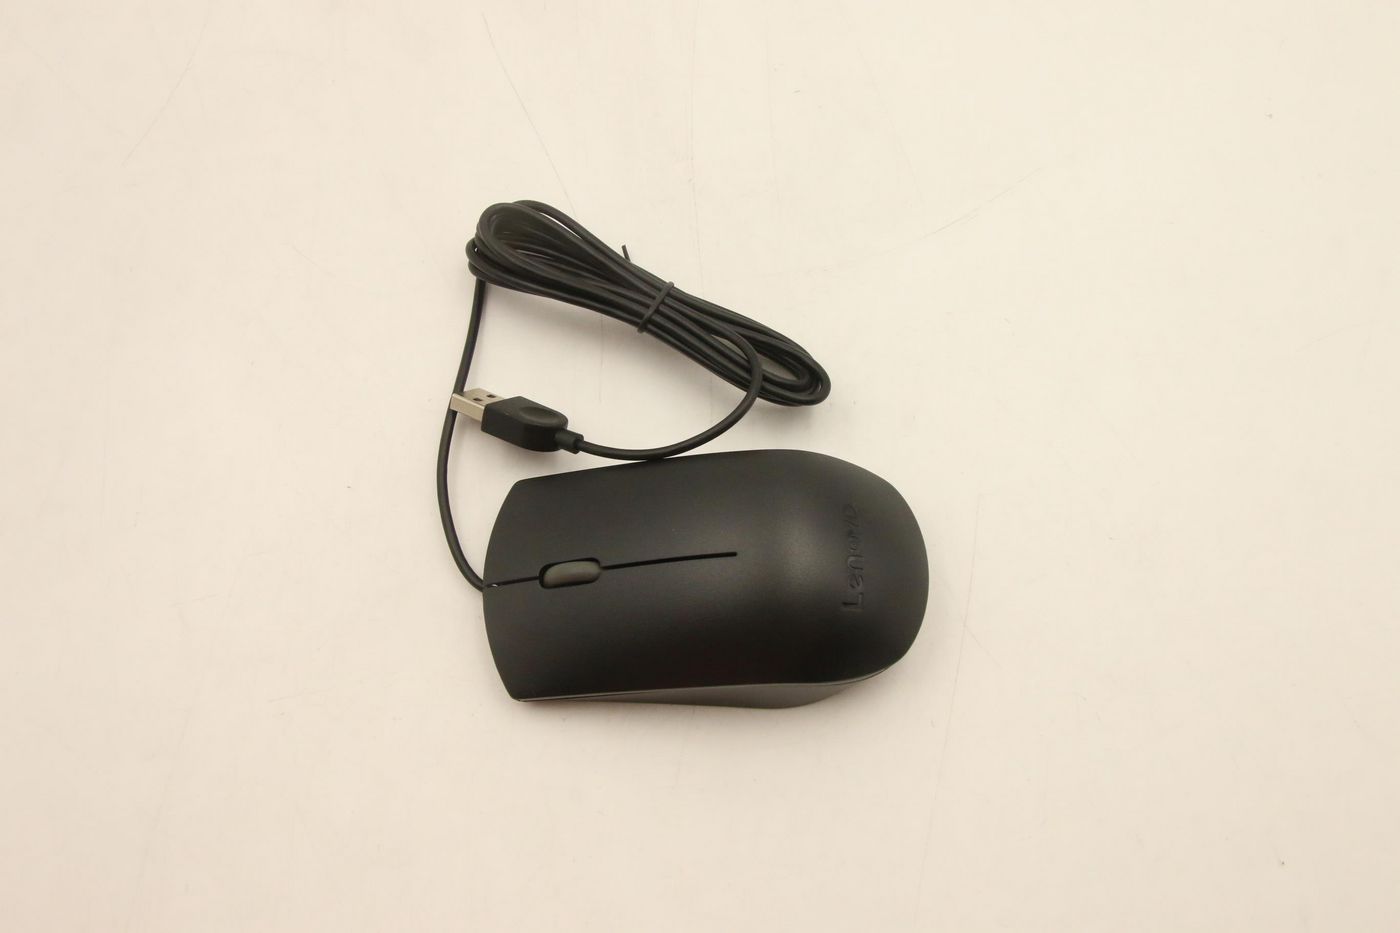 LENOVO USB Calliope Mouse Black (Grey Wheel)